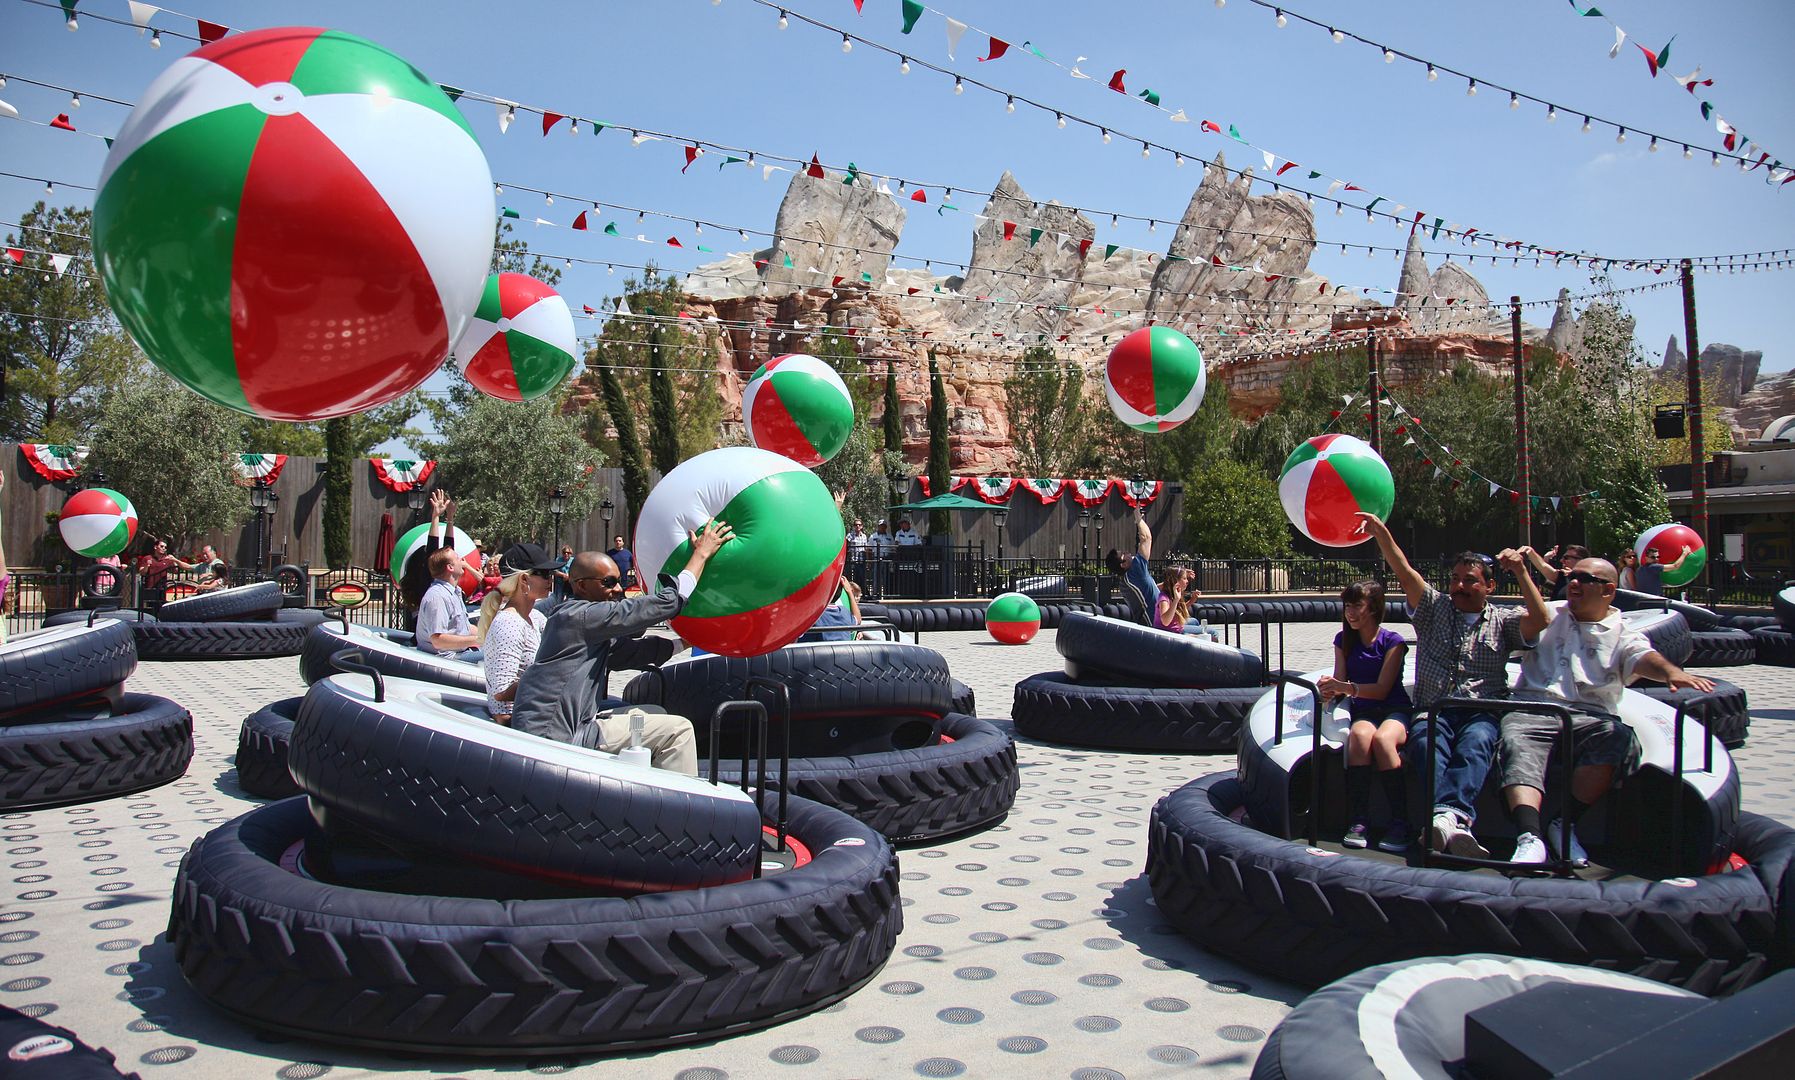 Luigi's Flying Tires ride at Cars Land